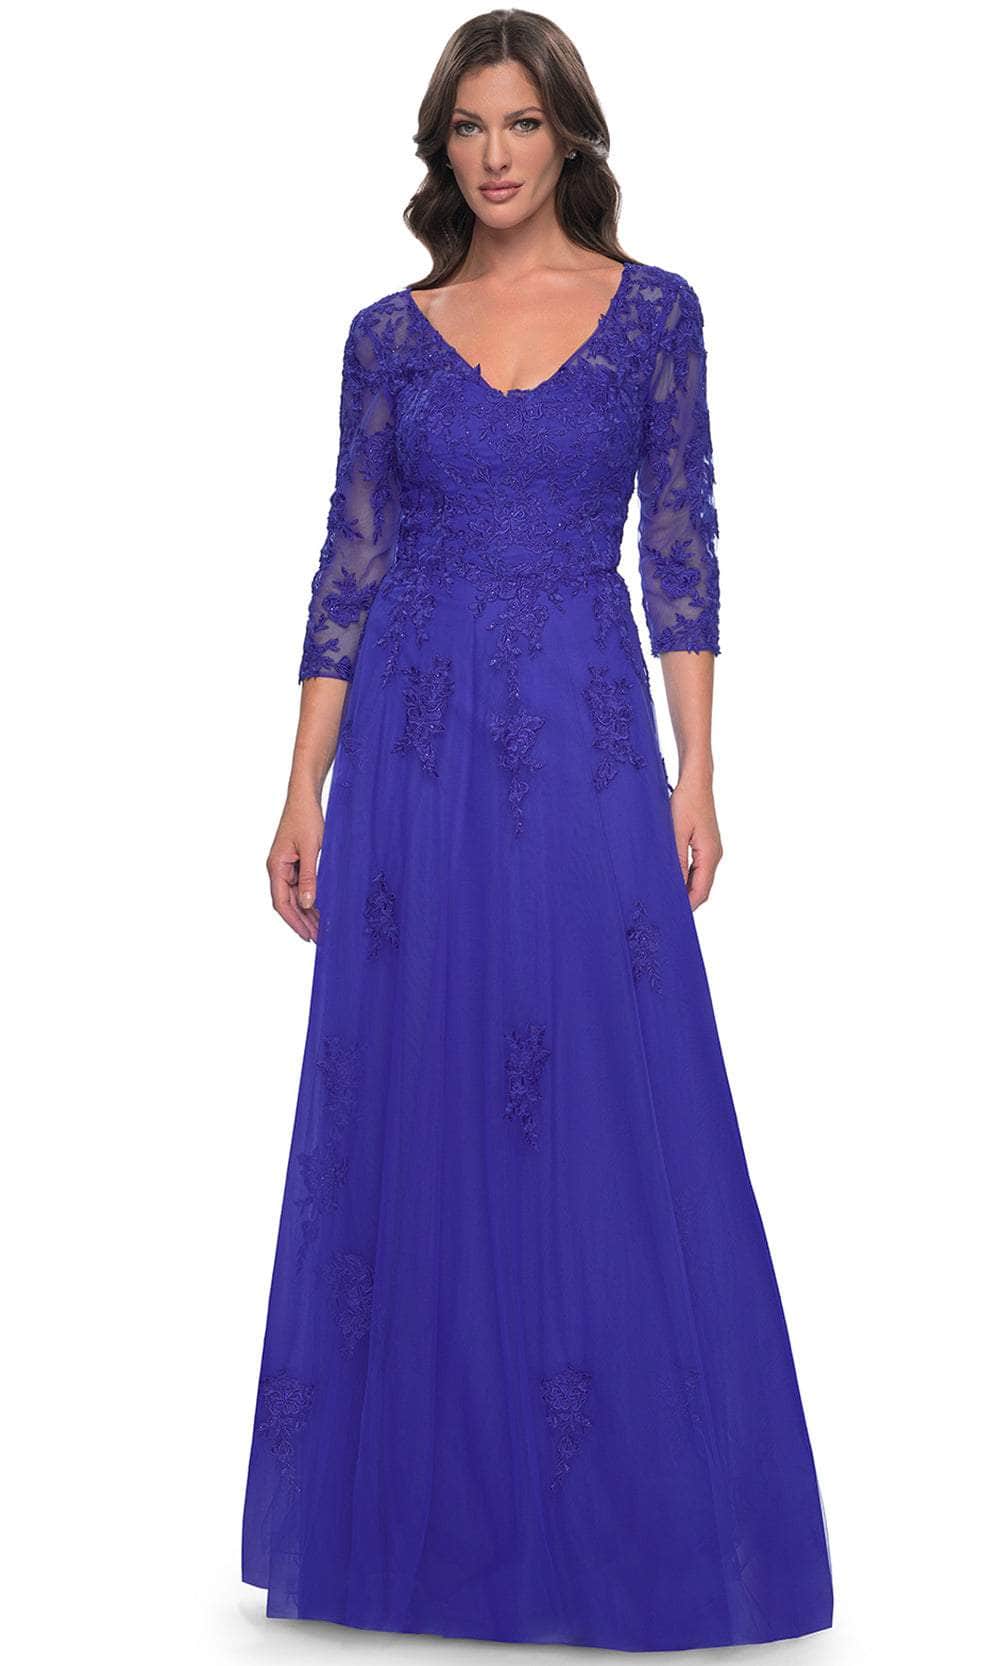 La Femme 30398 - V-Neck Lace Applique Evening Dress Mother of the Bride Dresses 4 / Royal Blue